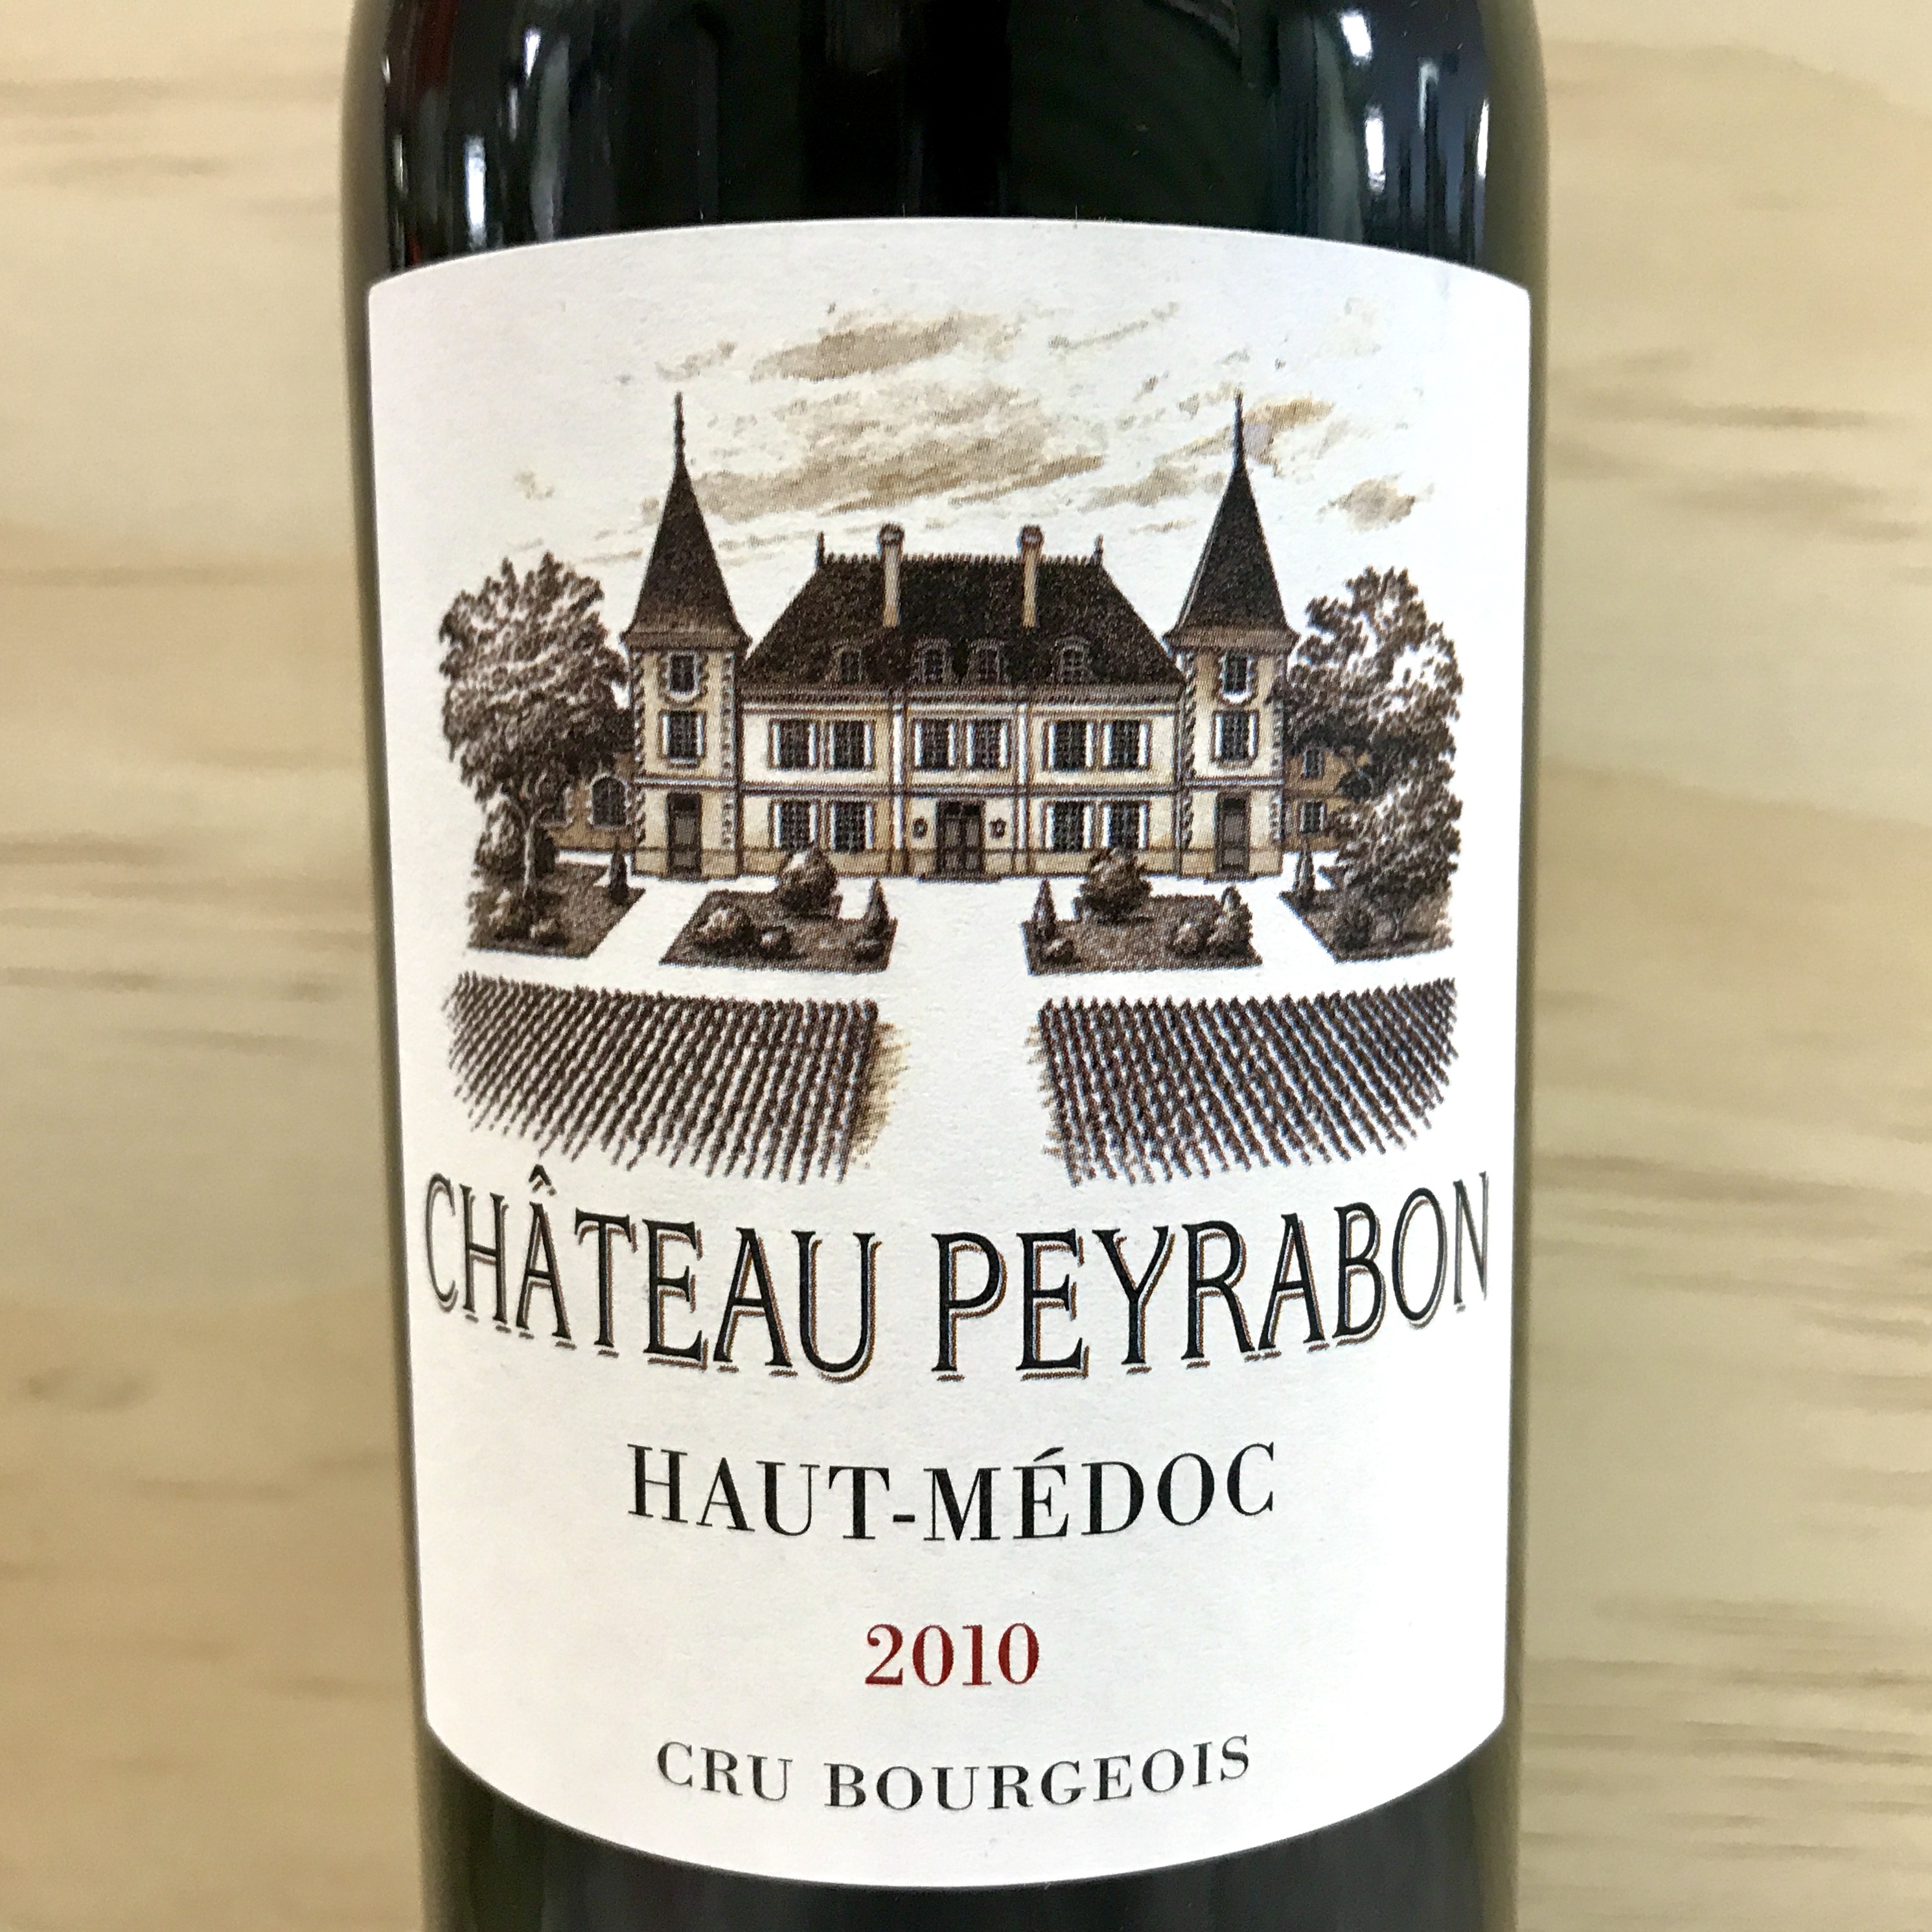 Chateau Peyrabon Haut-Medoc Cru Bourgeois